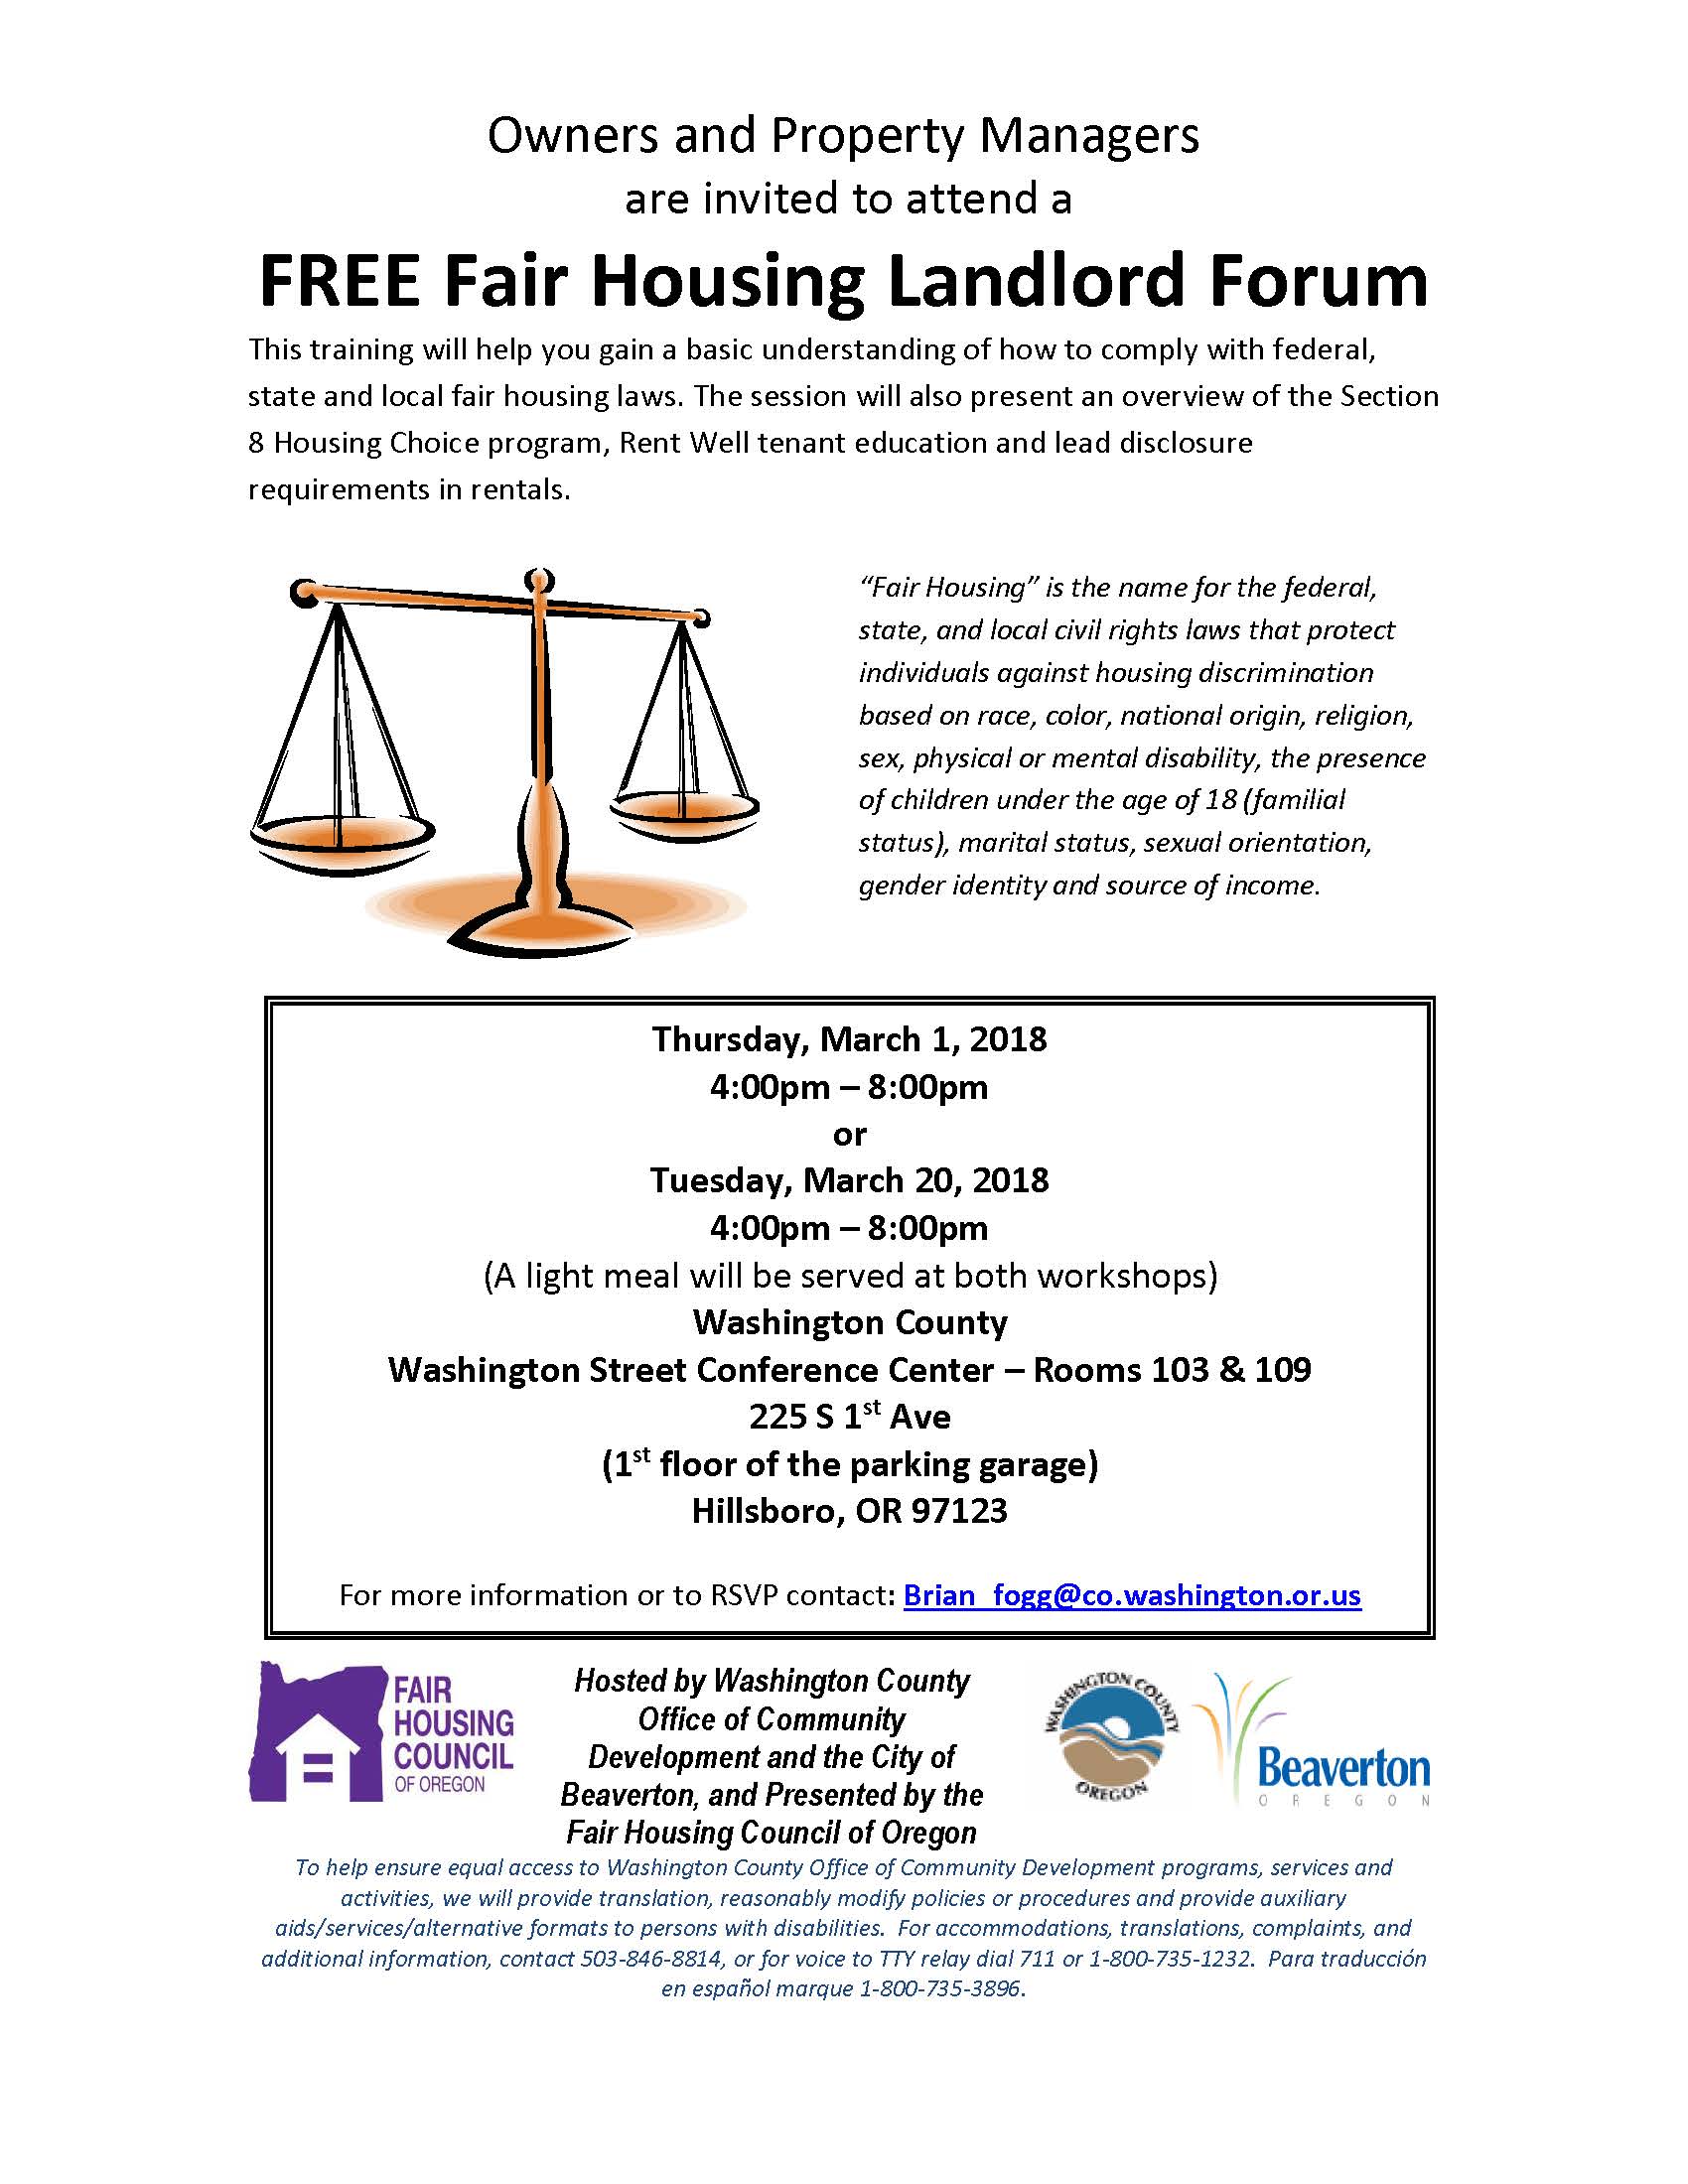 Fair Housing Landlord Forum Flier- 2018